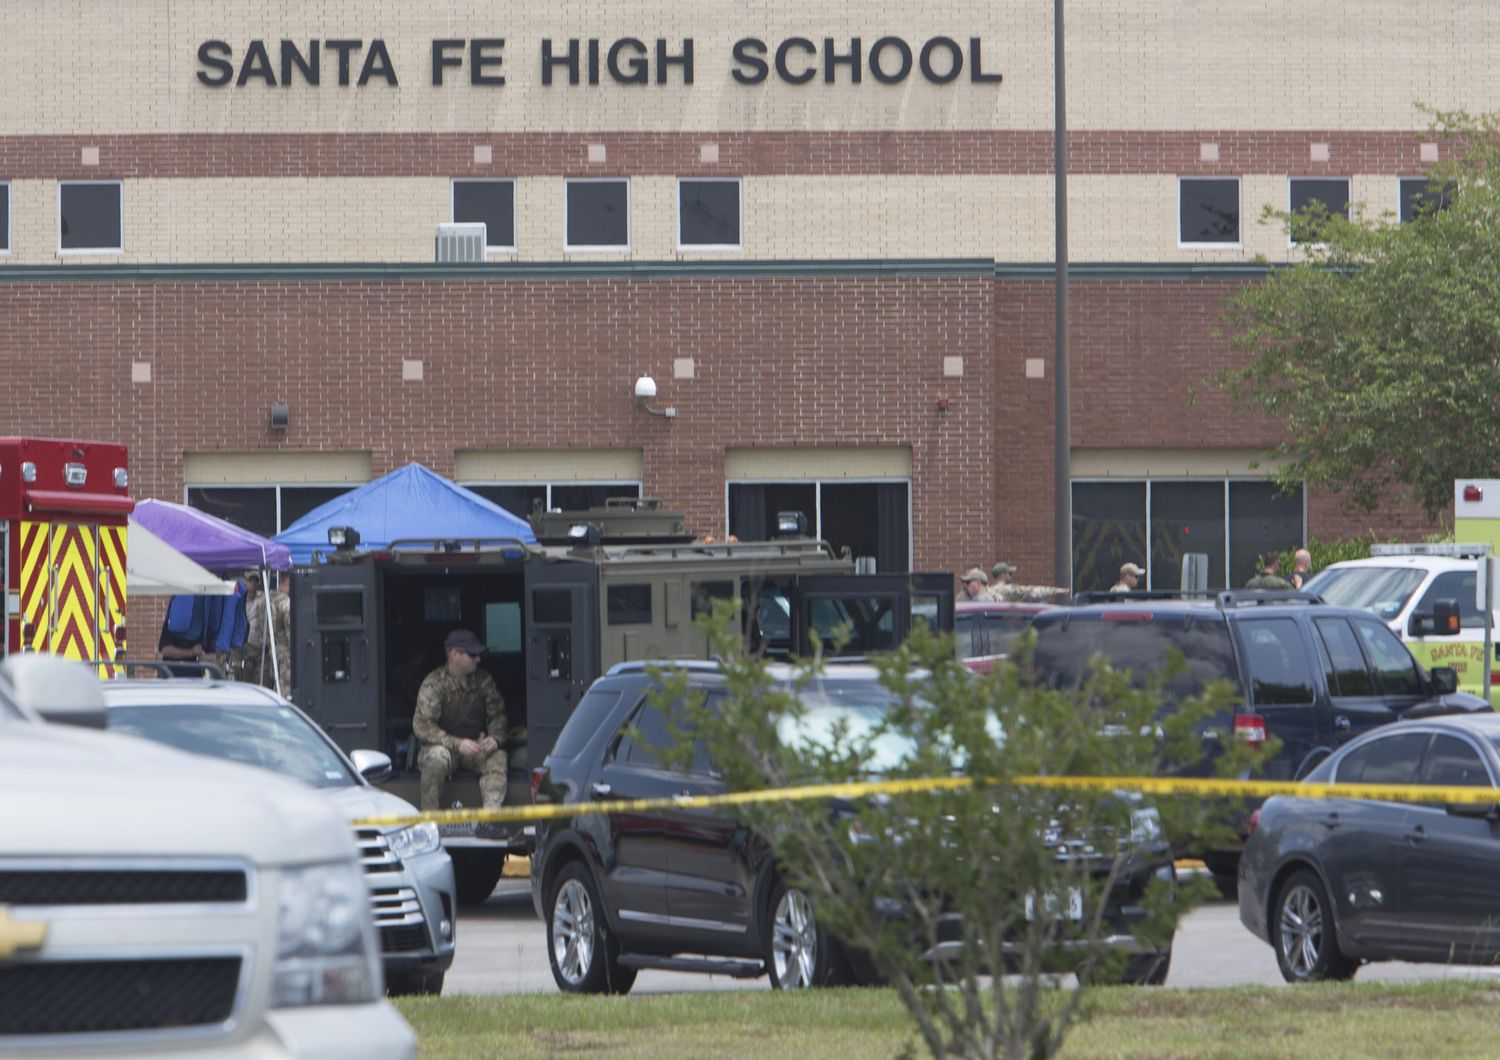 Santa Fe High School (AFP)